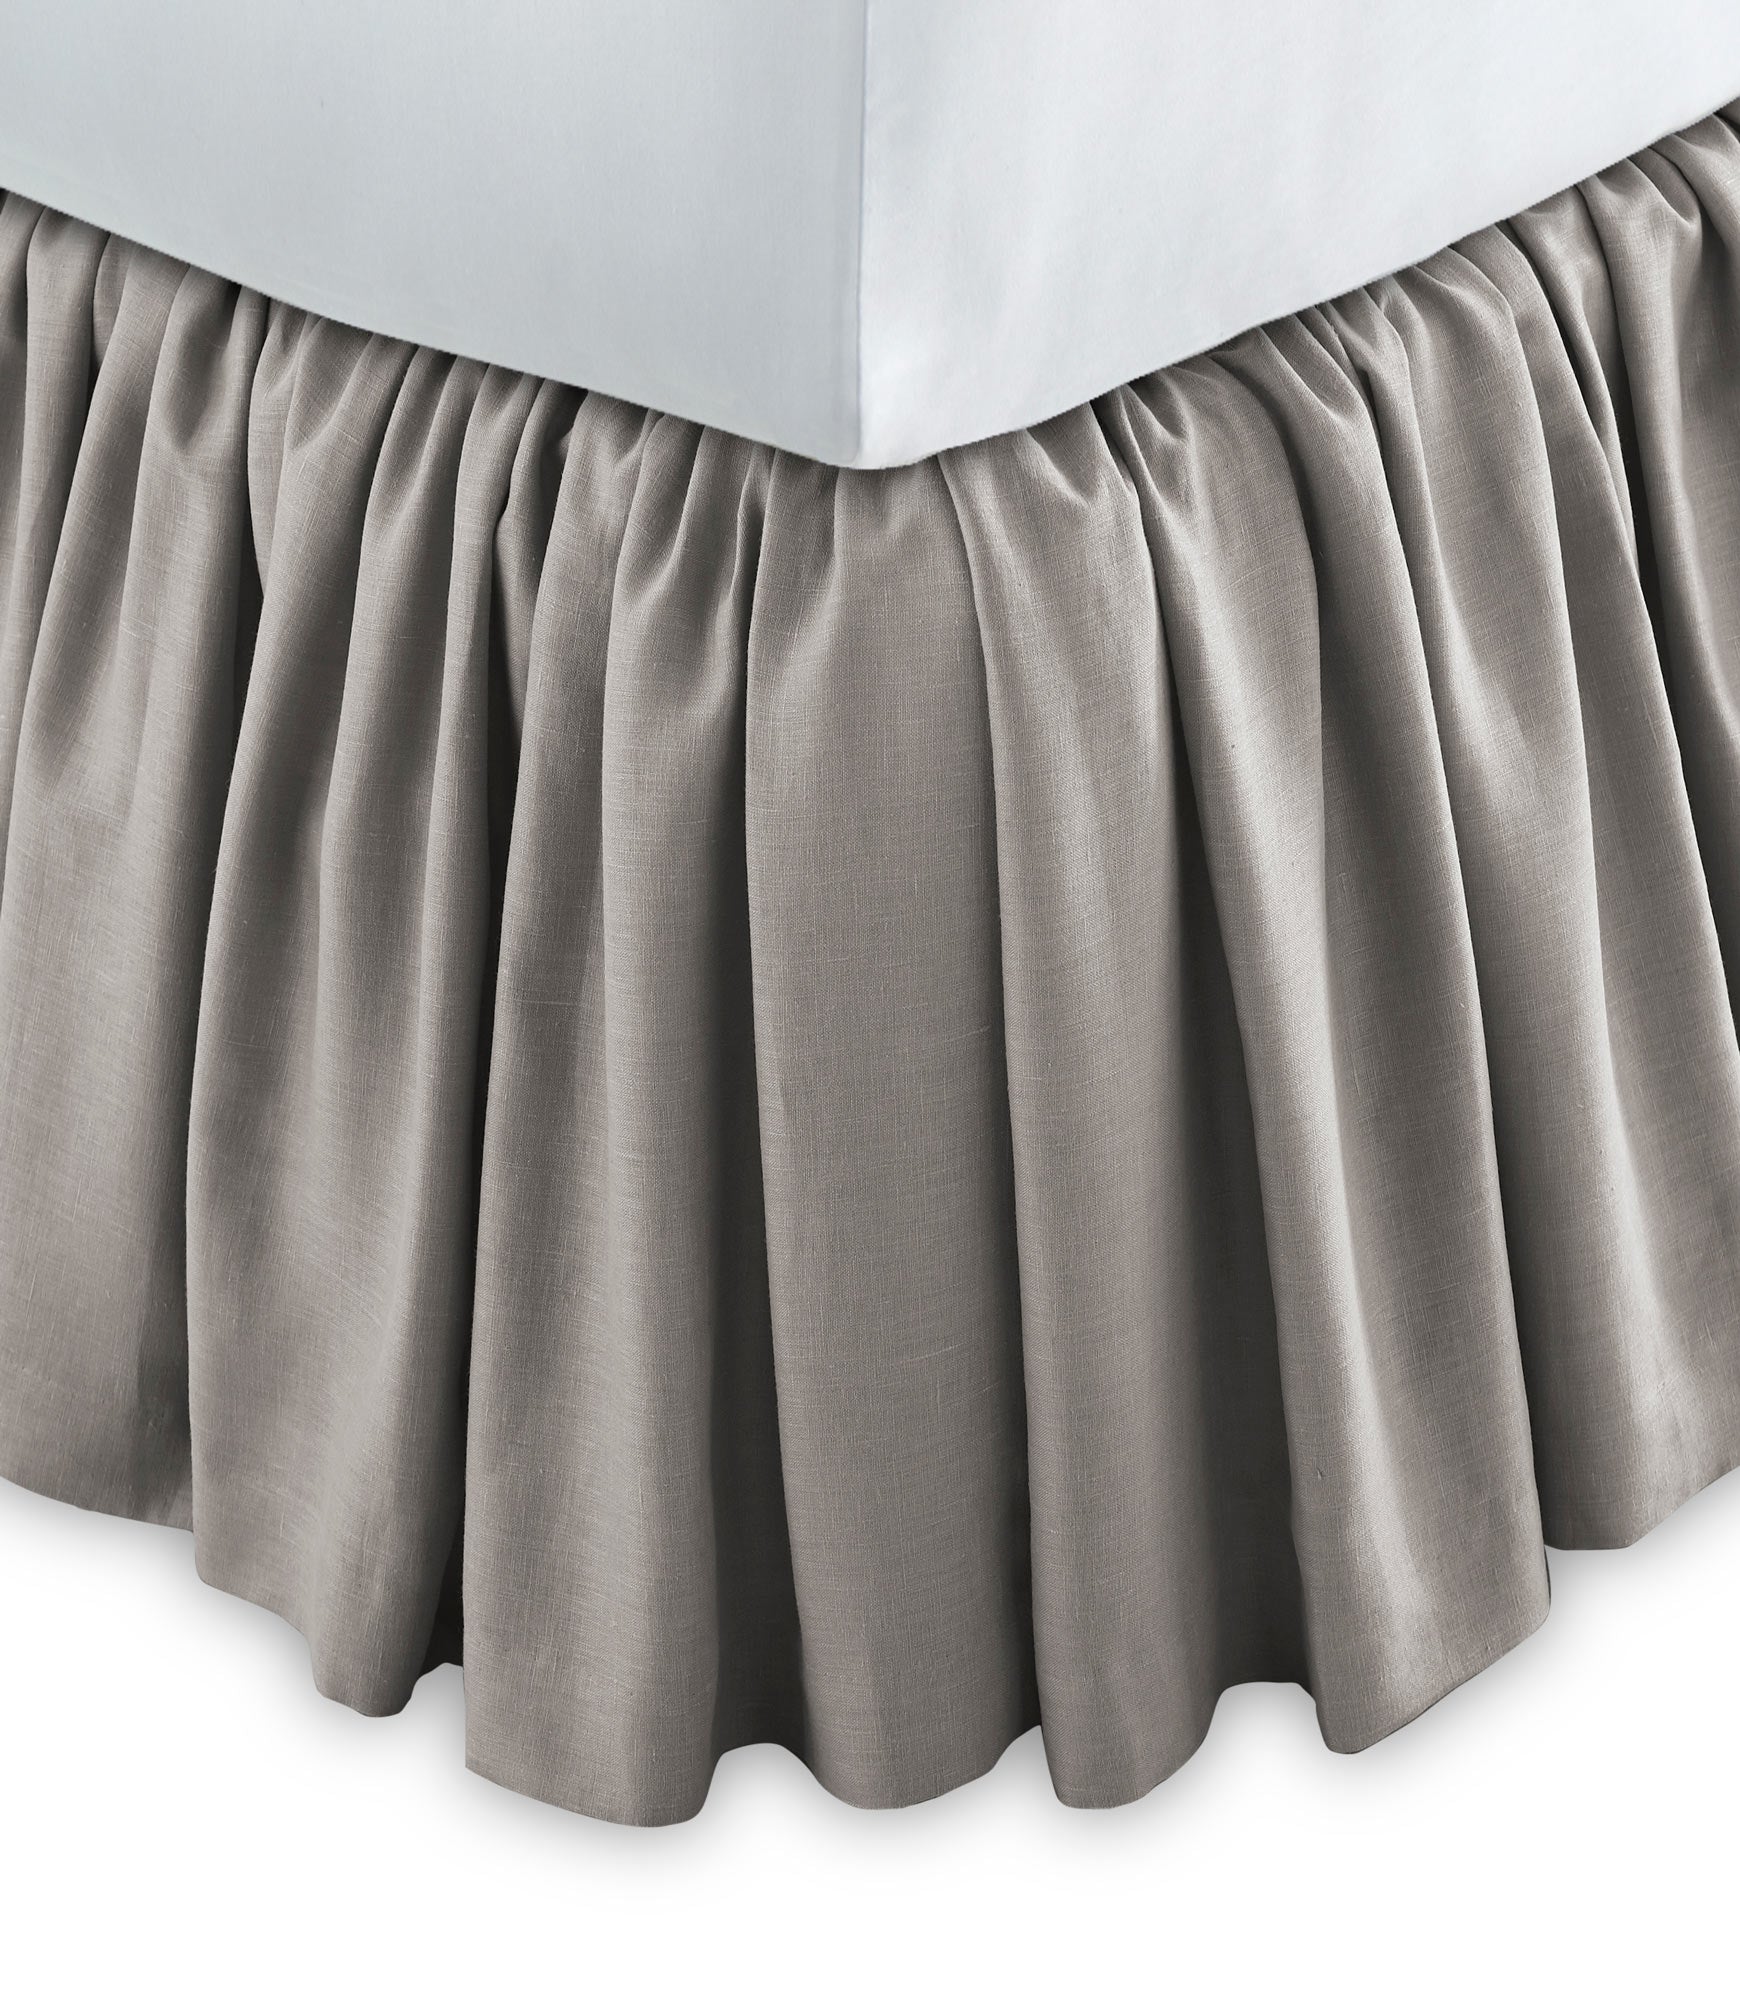 Mandalay Ruffled Linen Bed Skirt Gray